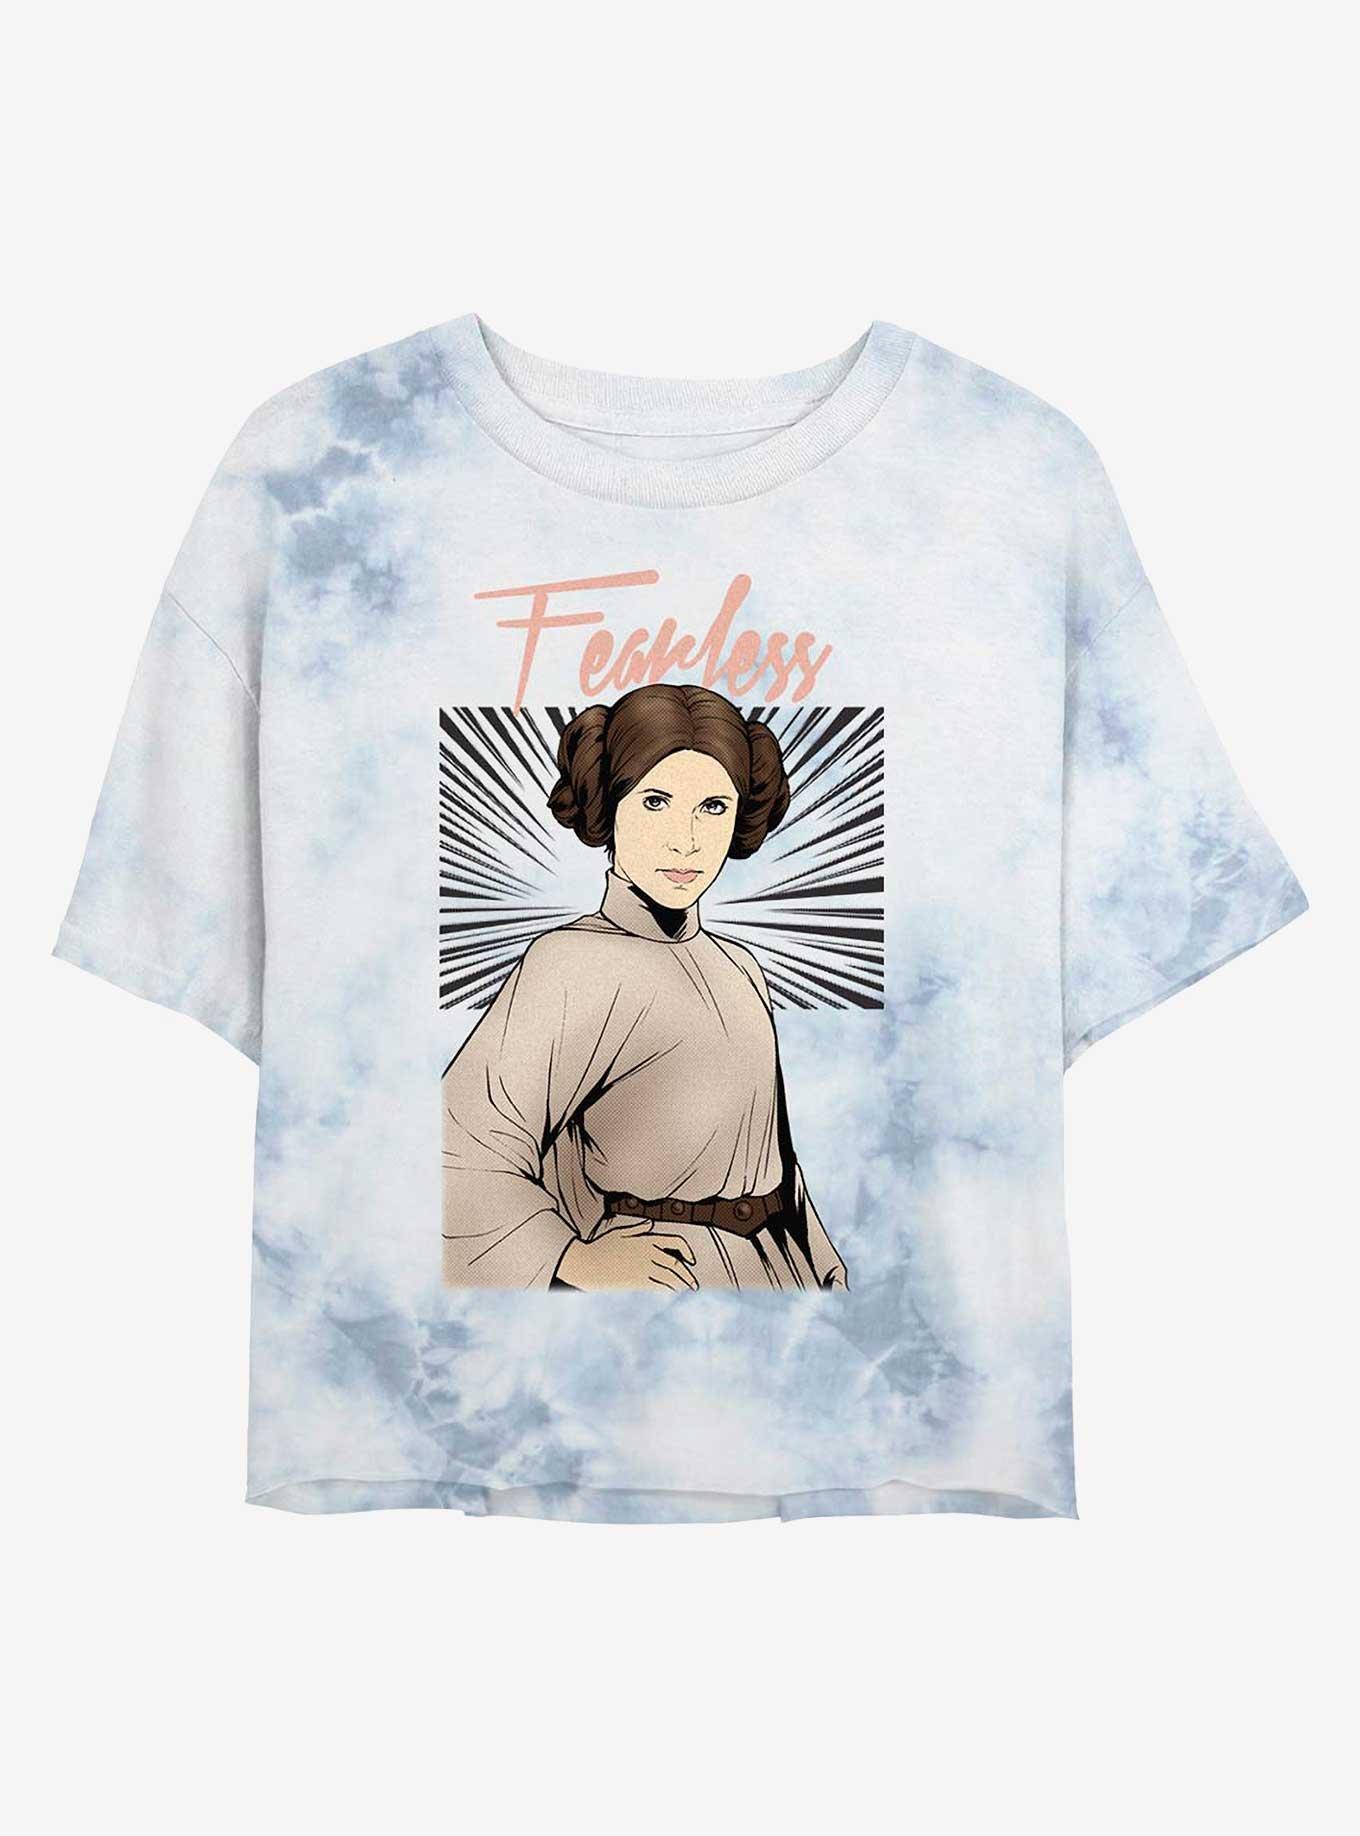 Star Wars Leia Fearless Tie-Dye Girls Crop T-Shirt